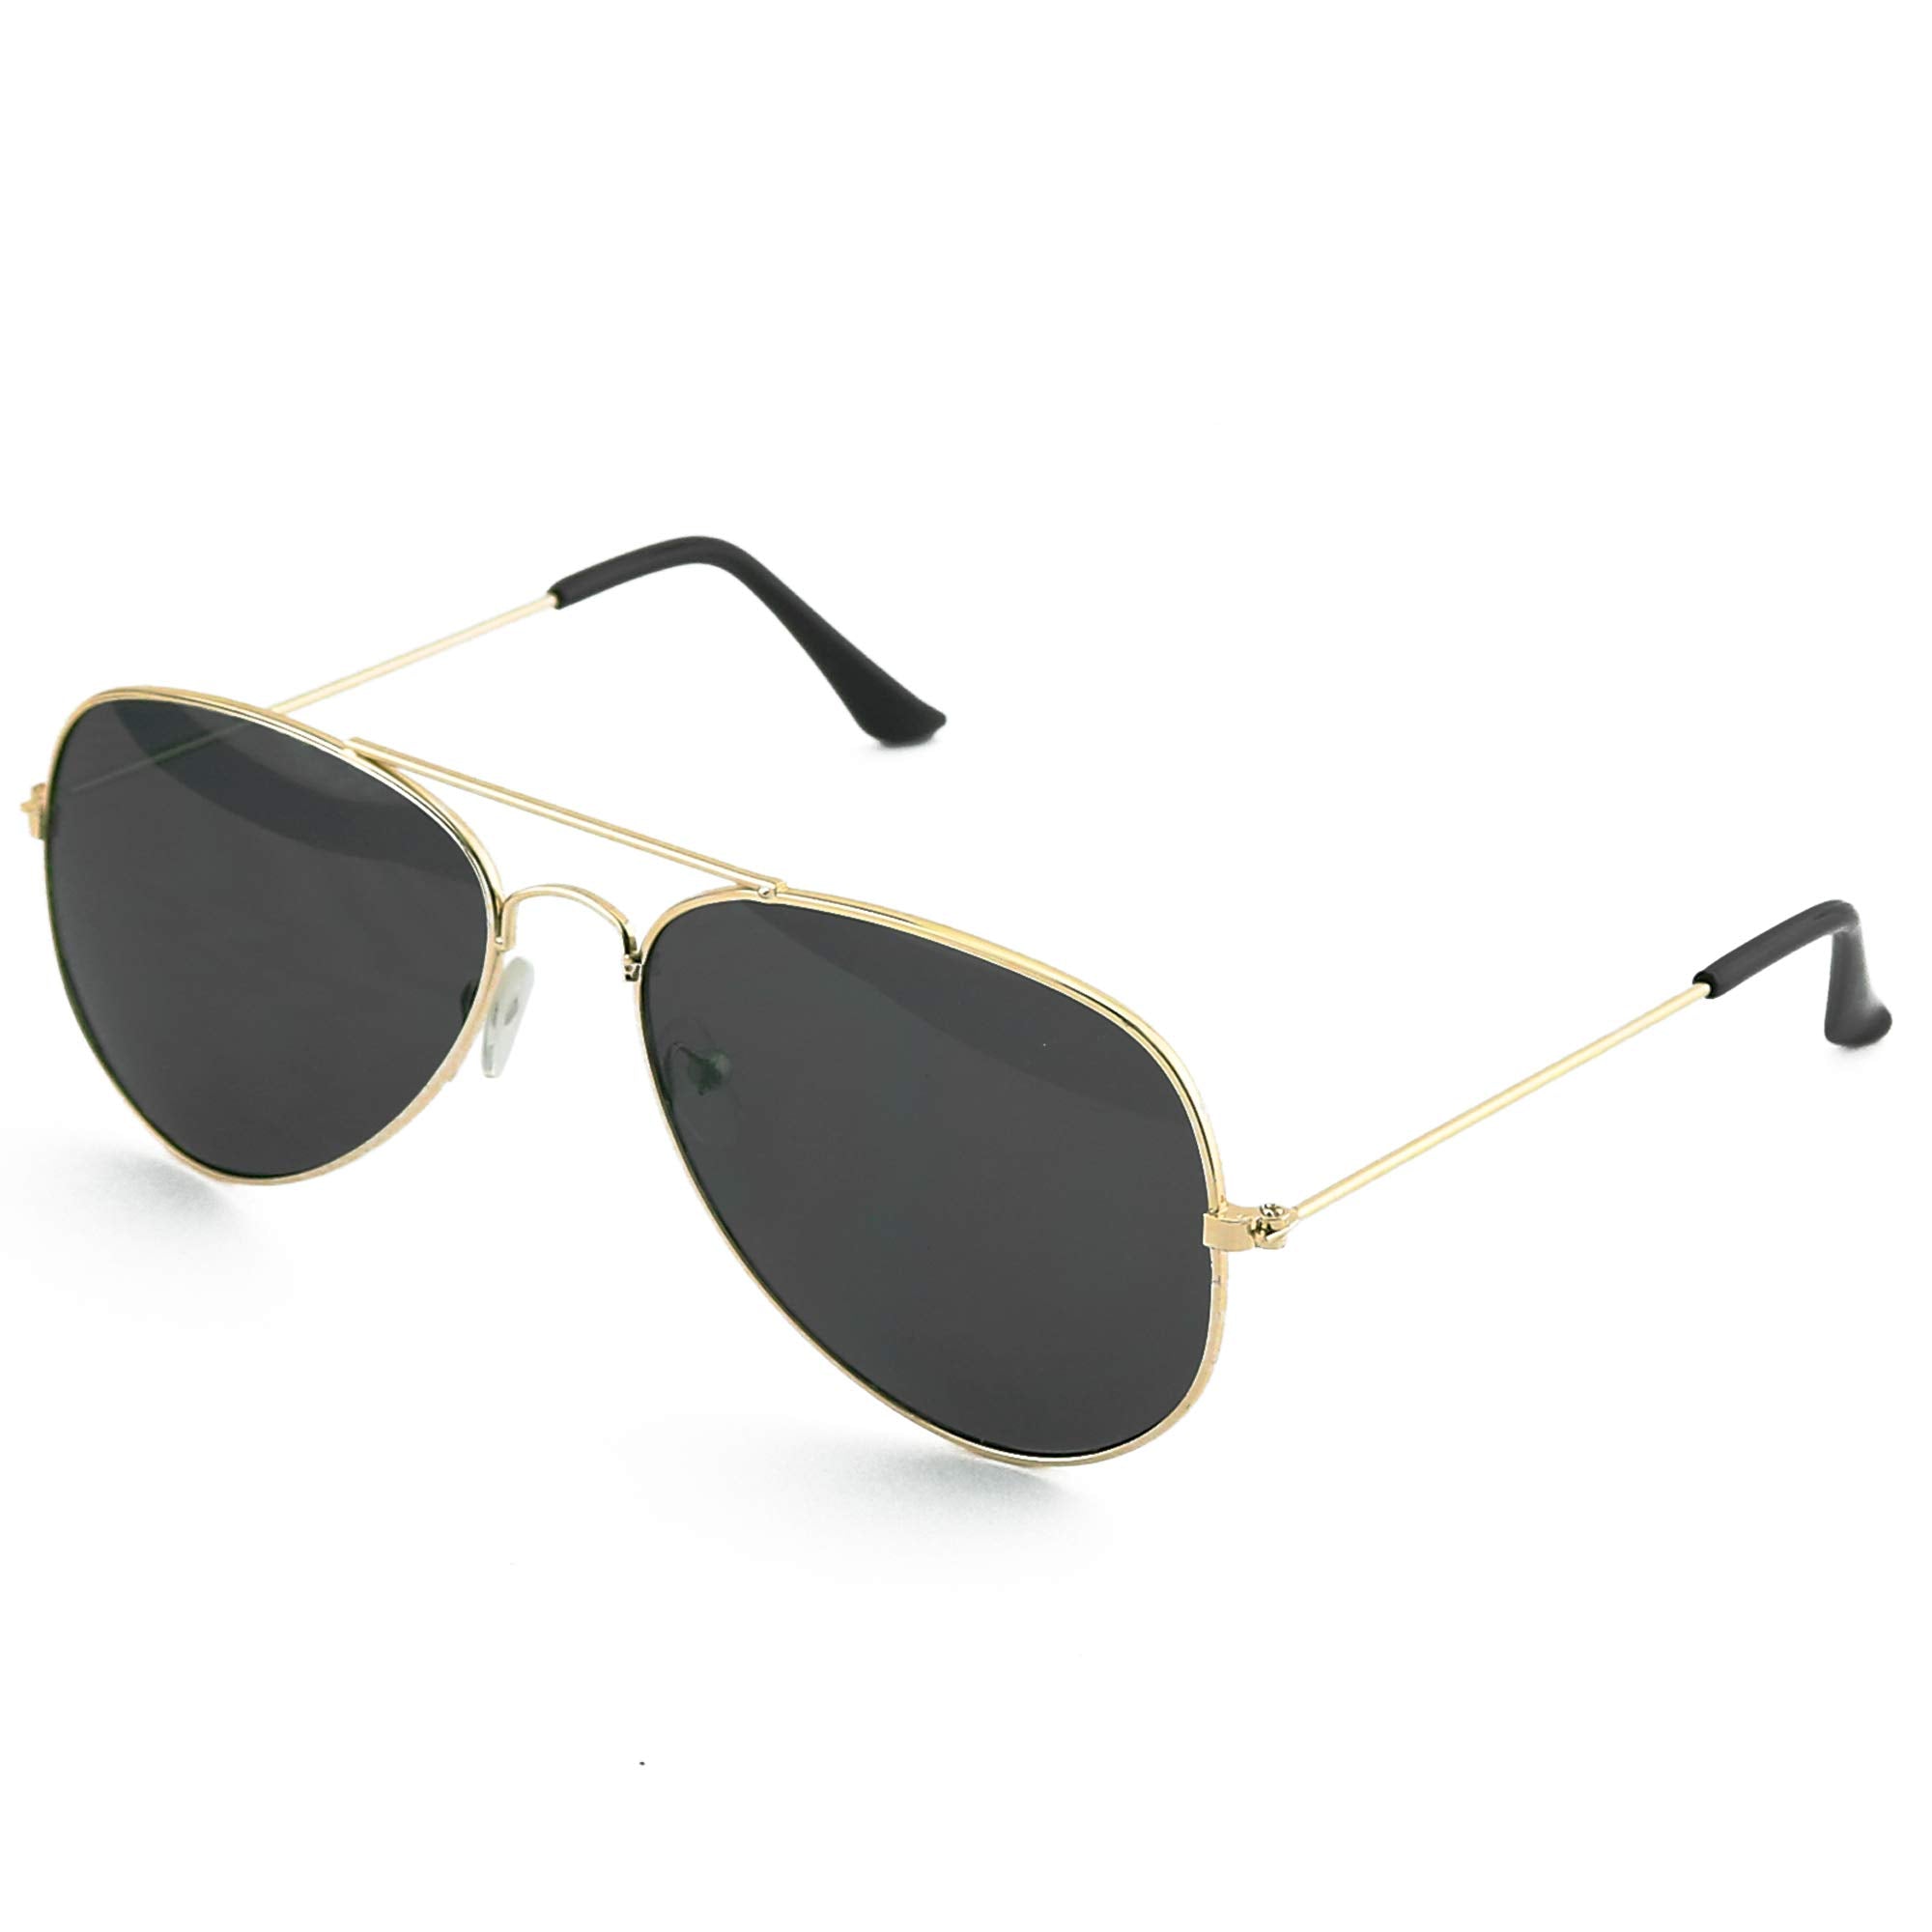 Black Gold Aviator Sunglasses - Military Style Dark Sun Glasses with G